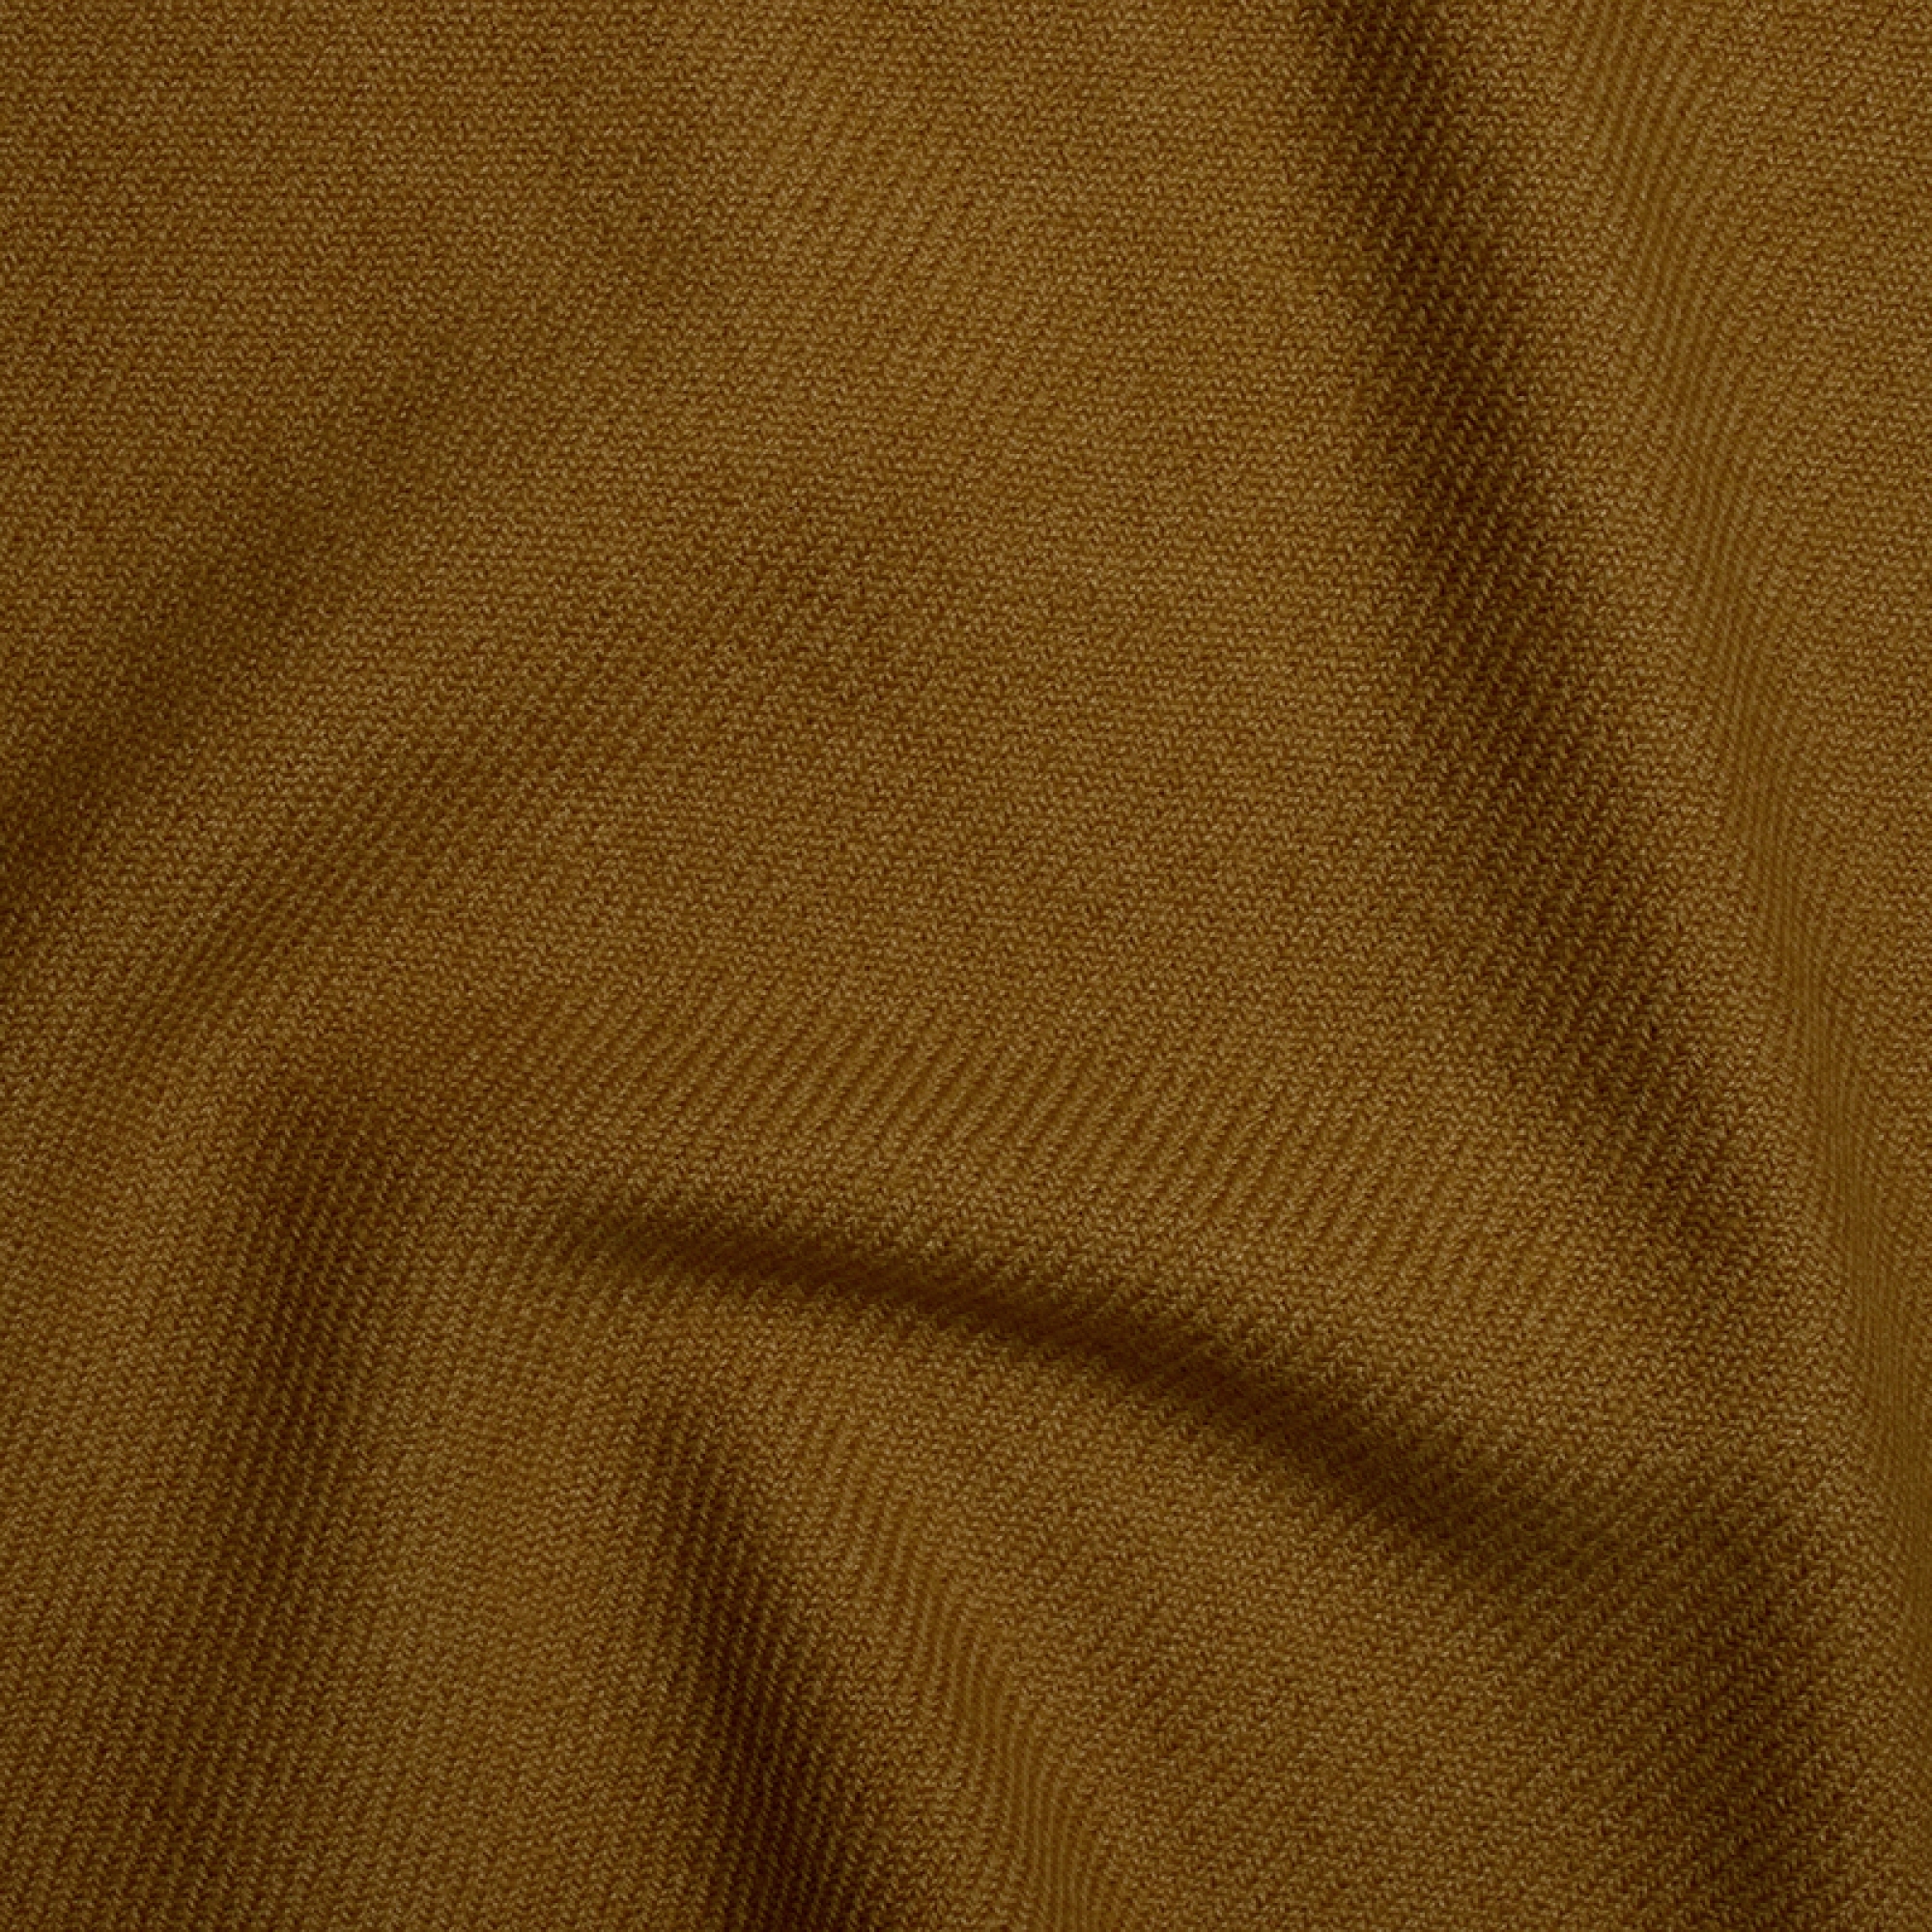 Cashmere accessories blanket toodoo plain xl 240 x 260 peanut butter 240 x 260 cm